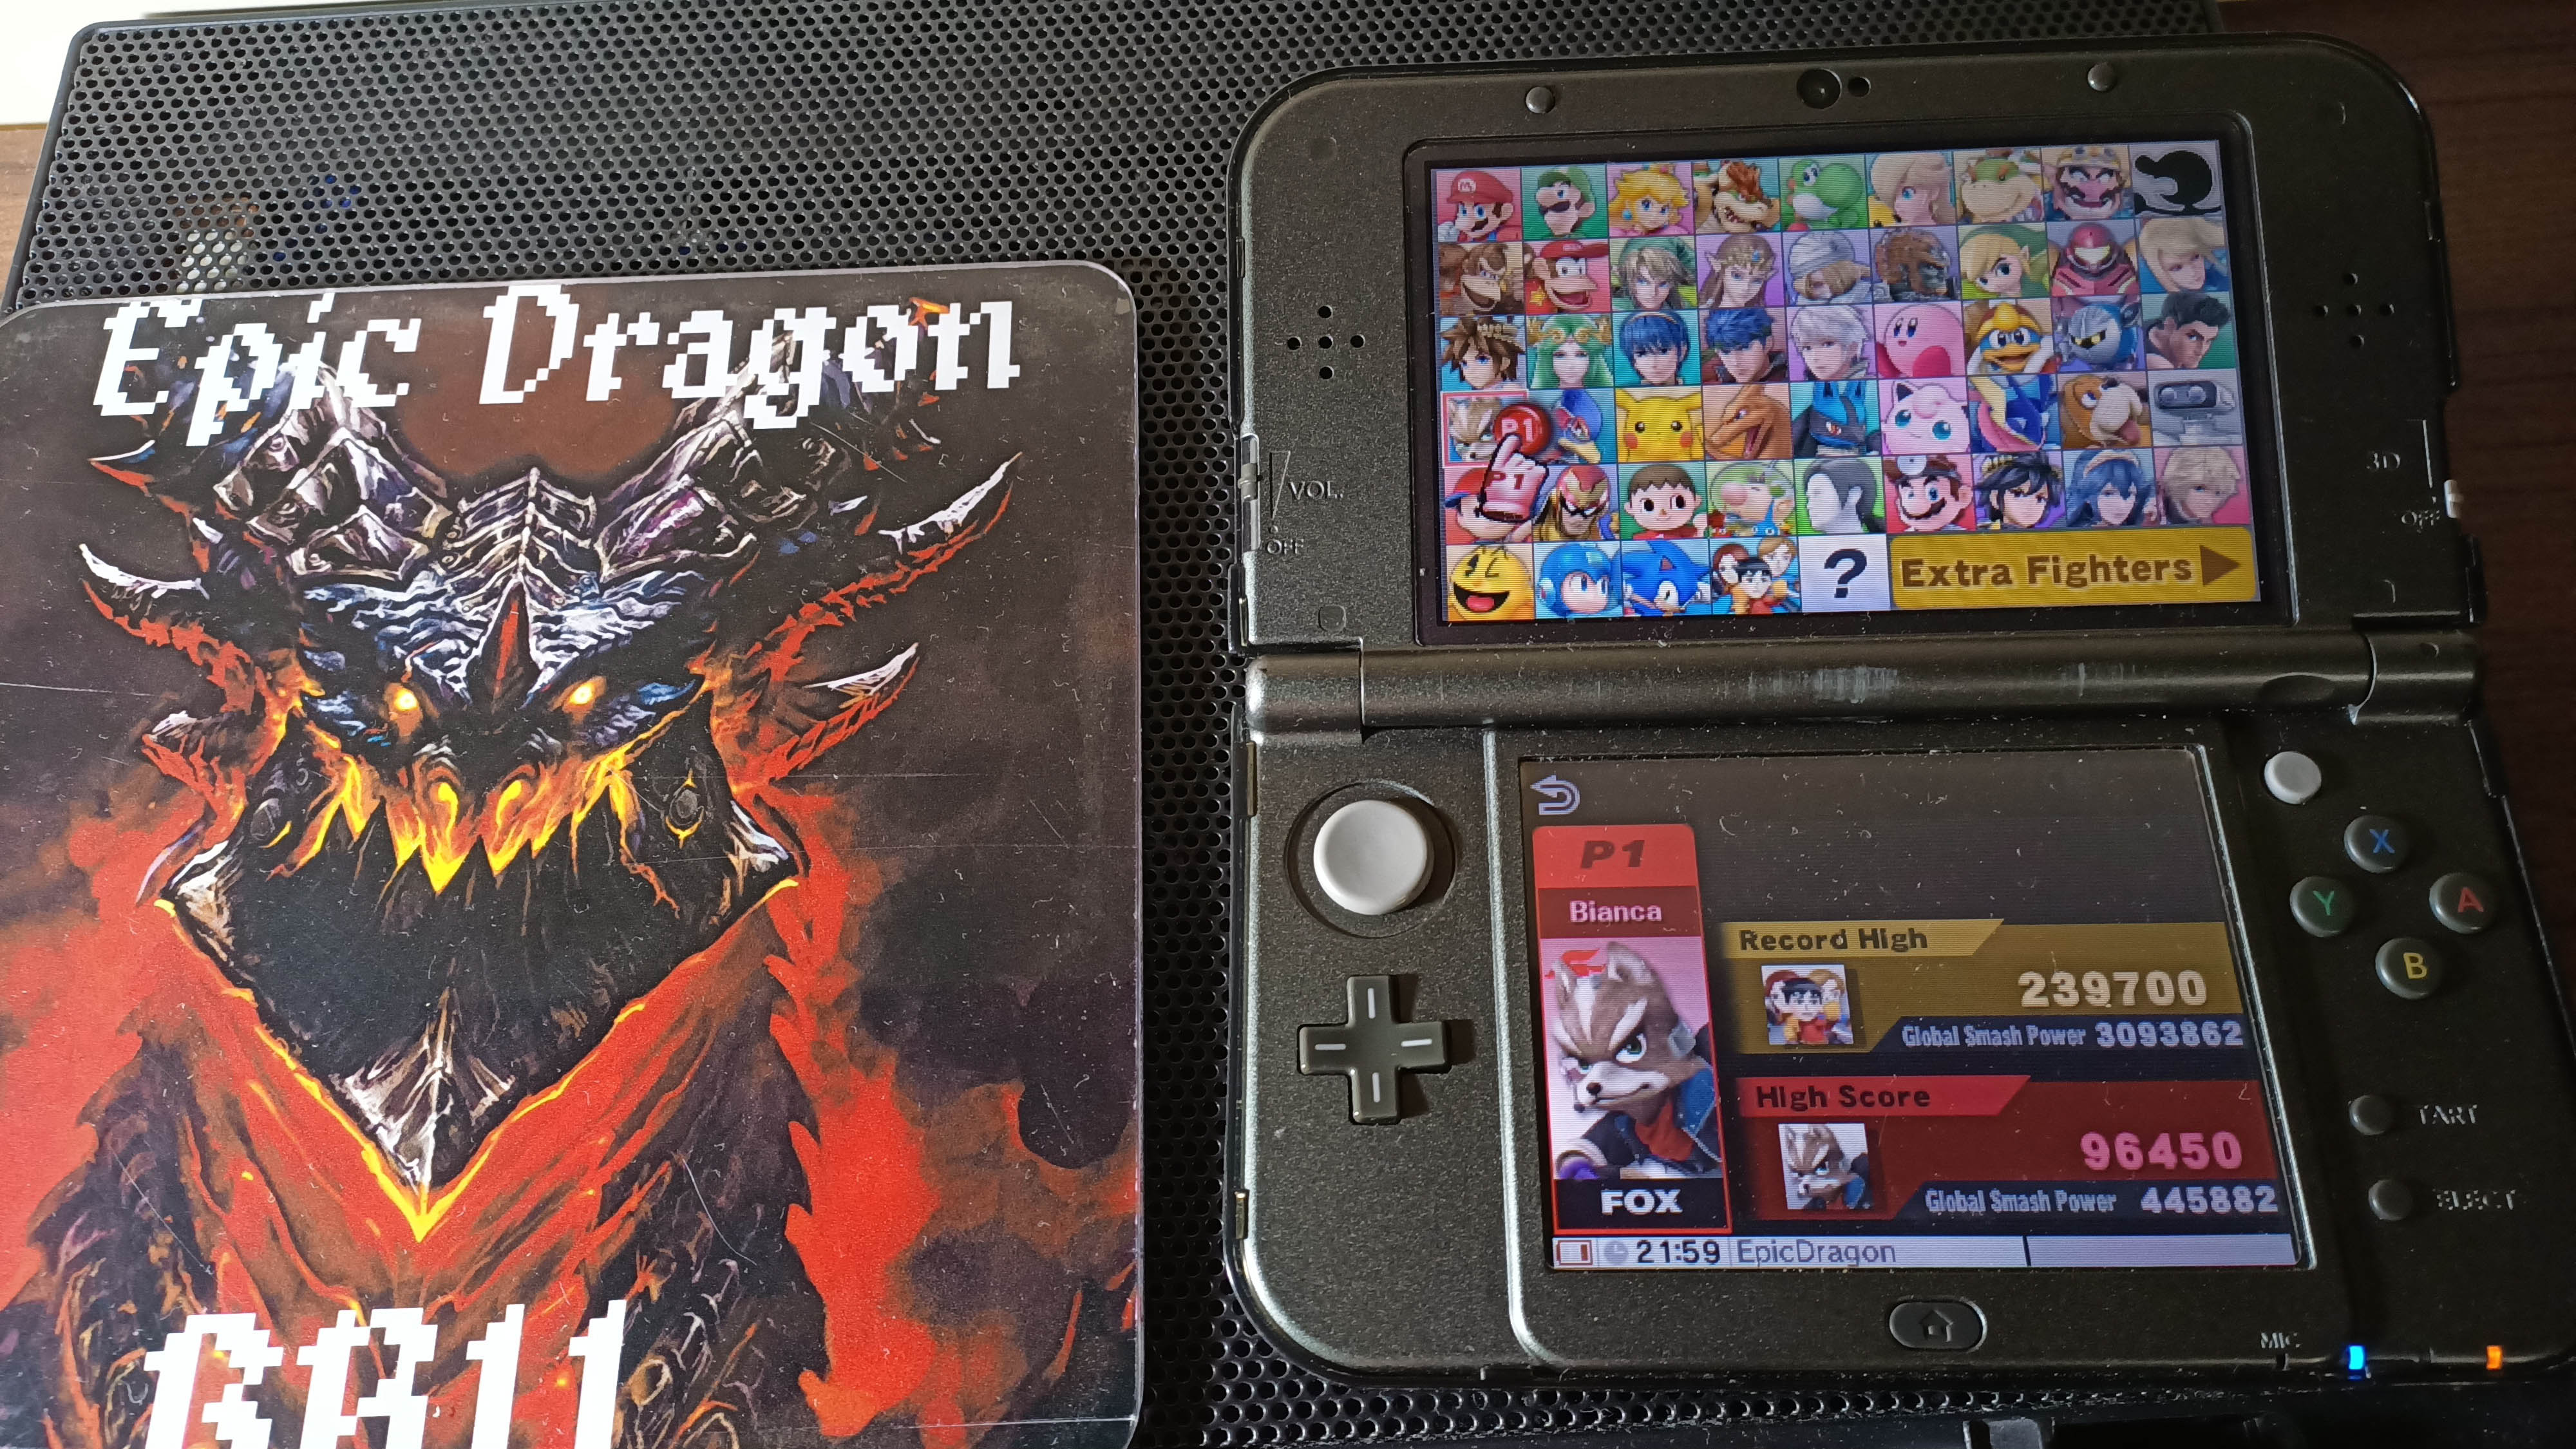 EpicDragon: Super Smash Bros. for Nintendo 3DS: Target Blast: Fox (Nintendo 3DS) 96,450 points on 2022-09-23 16:40:23